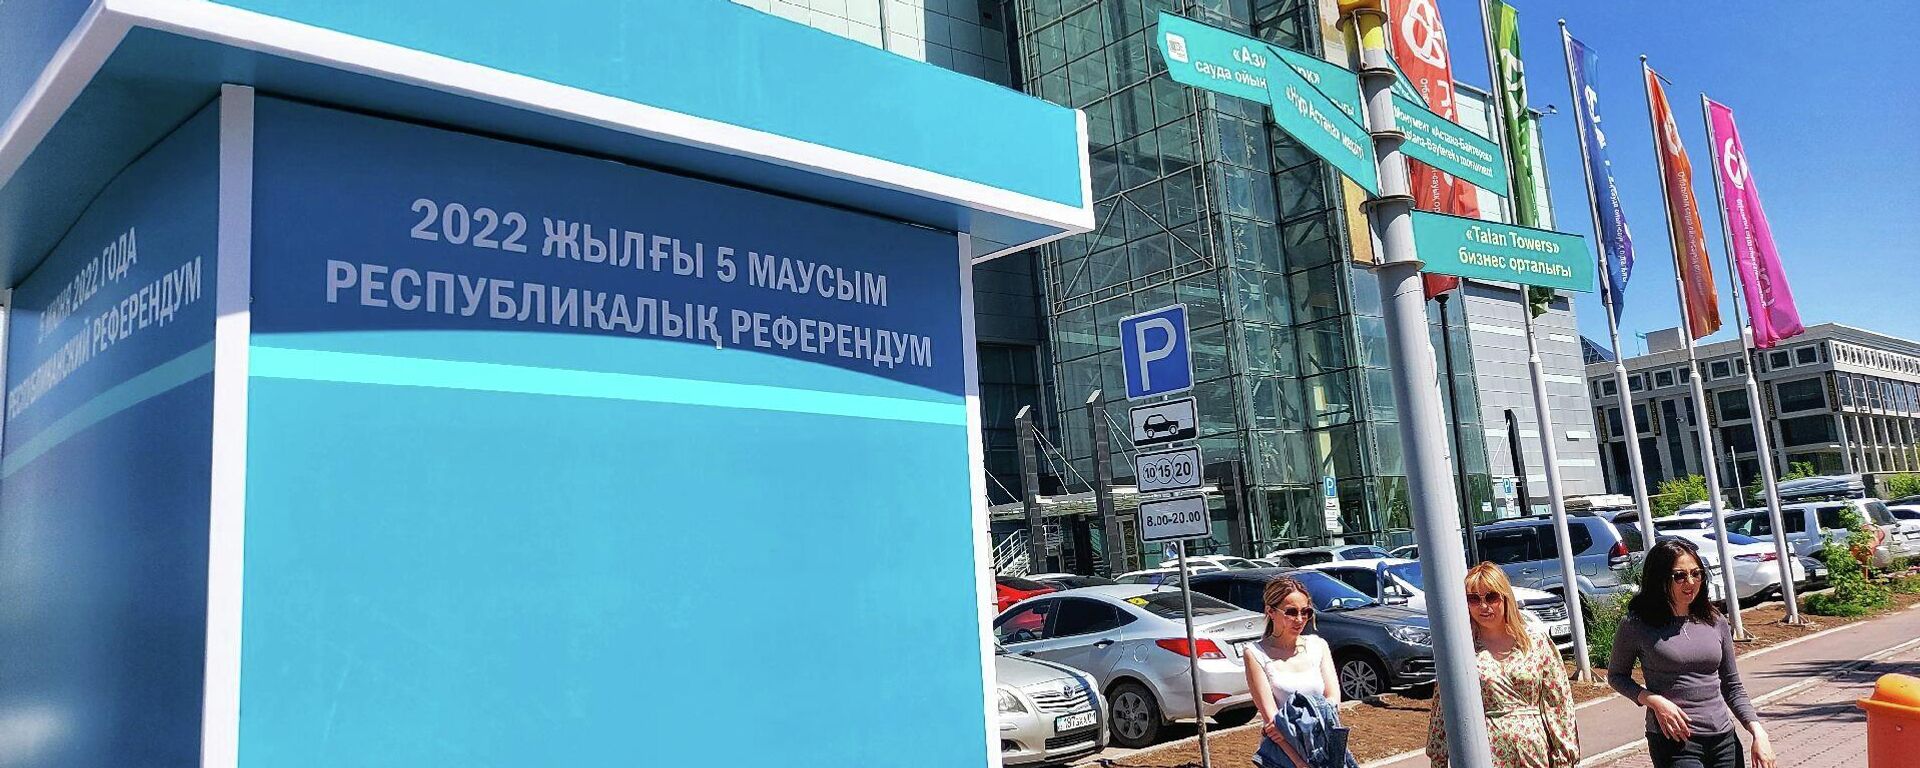 Референдум 5 июня 2022 года - Sputnik Казахстан, 1920, 03.06.2022